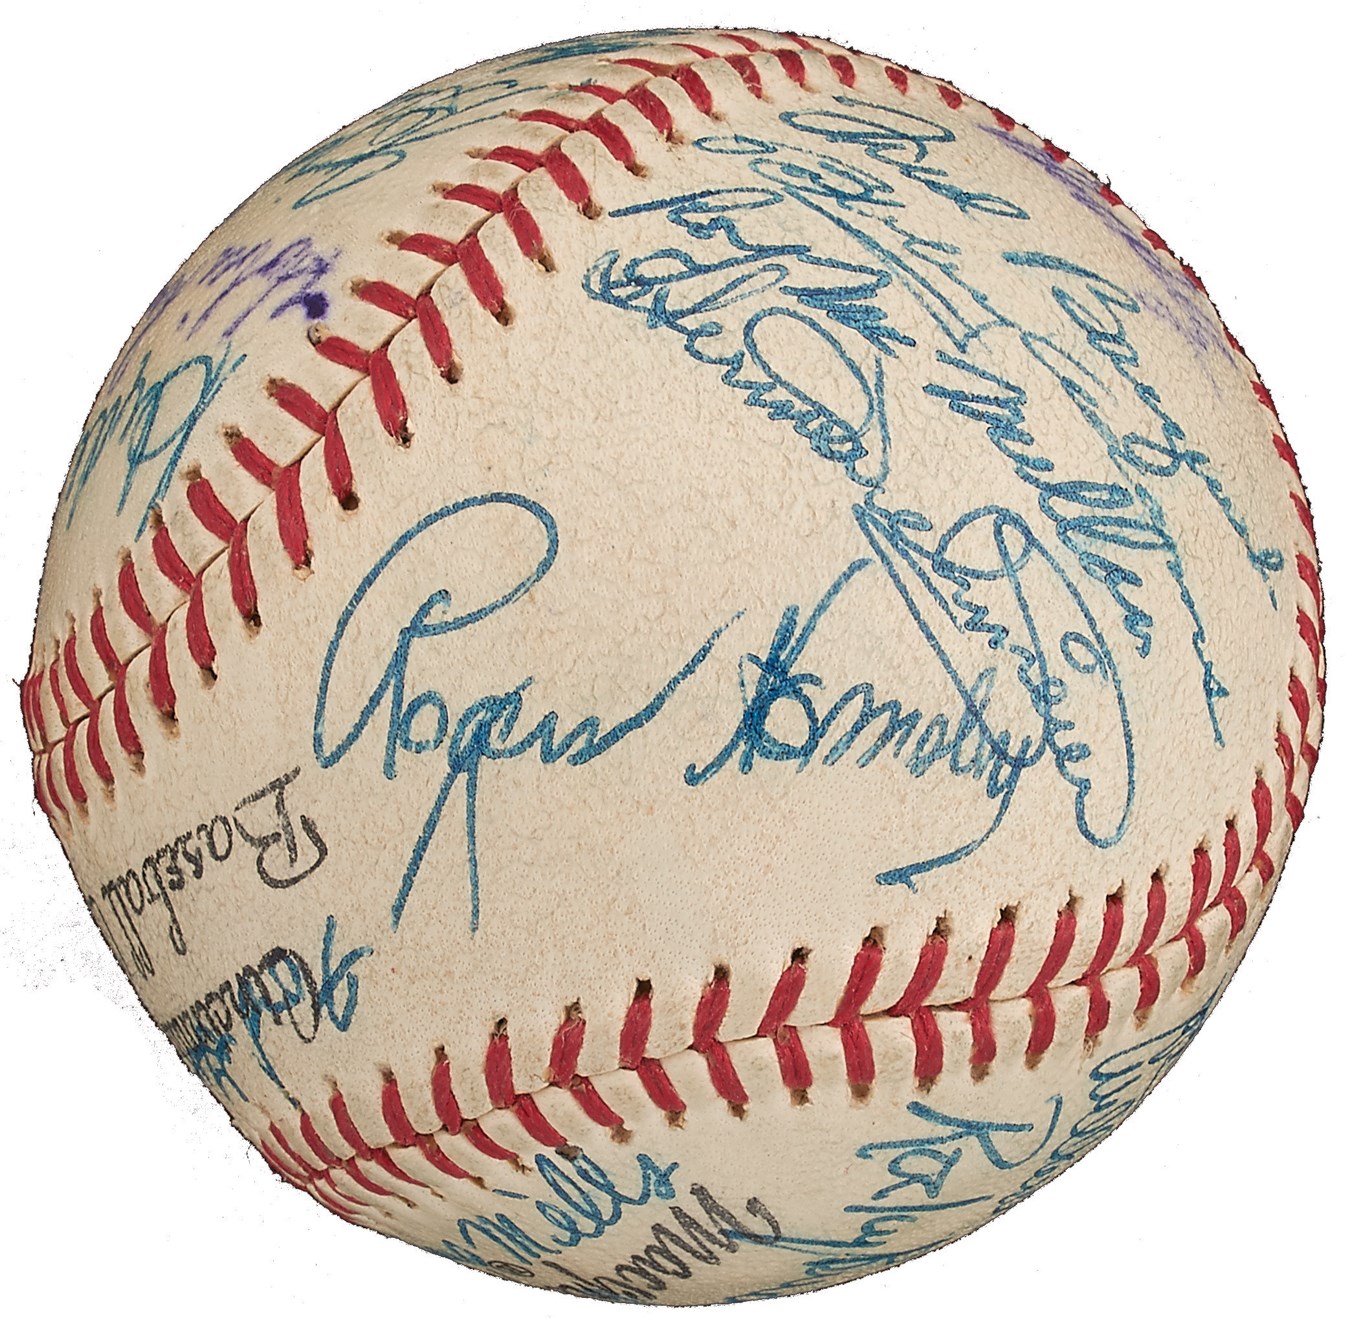 Pete Rose & Cincinnati Reds - 1953 Cincinnati Reds Team-Signed Baseball with Rogers Hornsby (PSA)